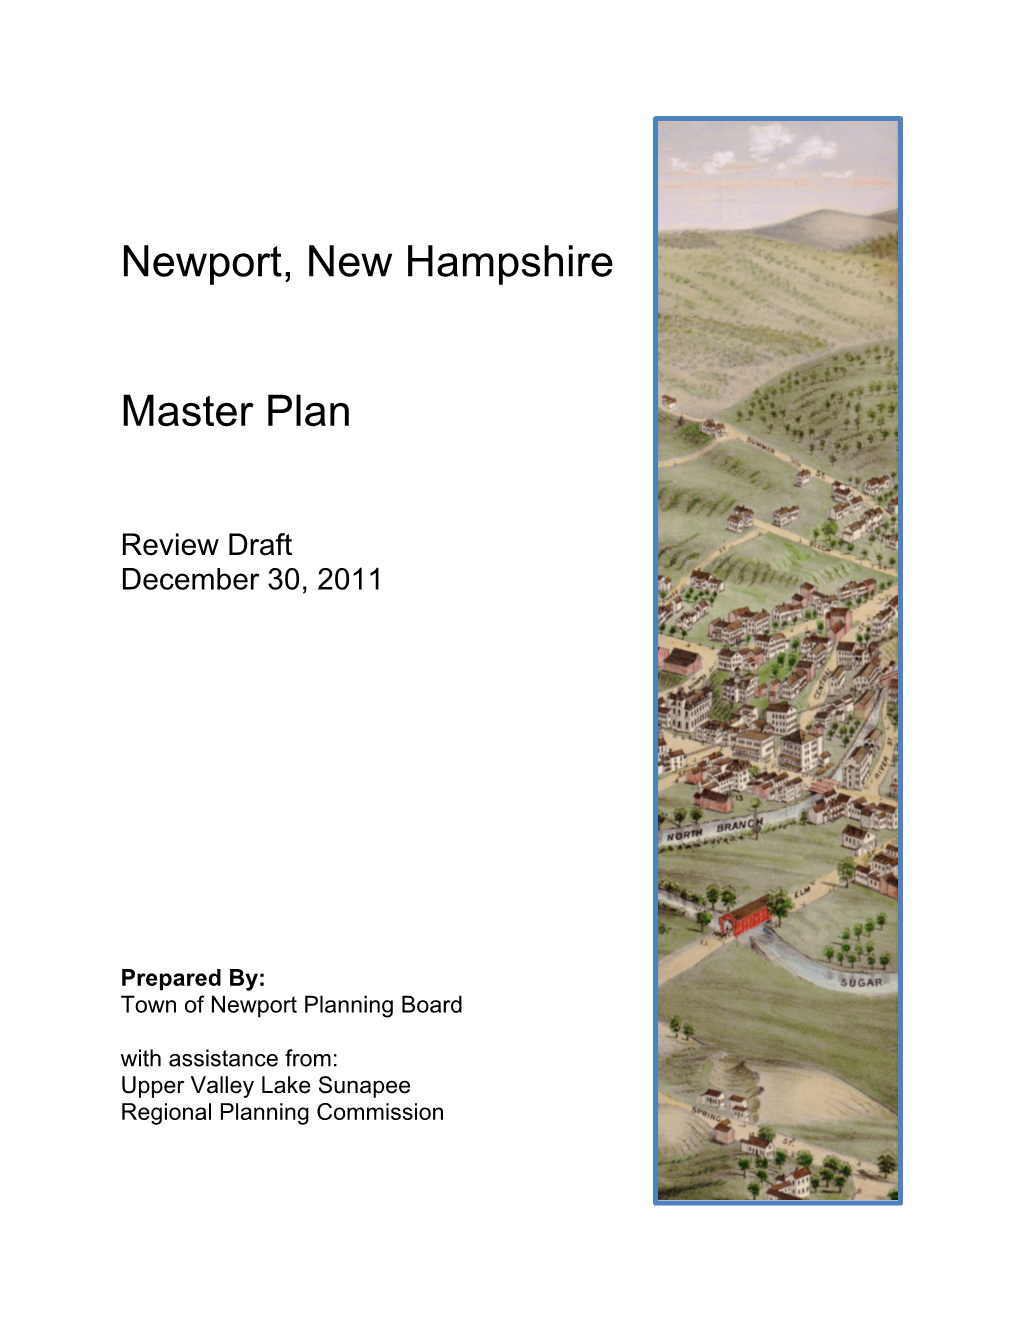 Newport, New Hampshire Master Plan